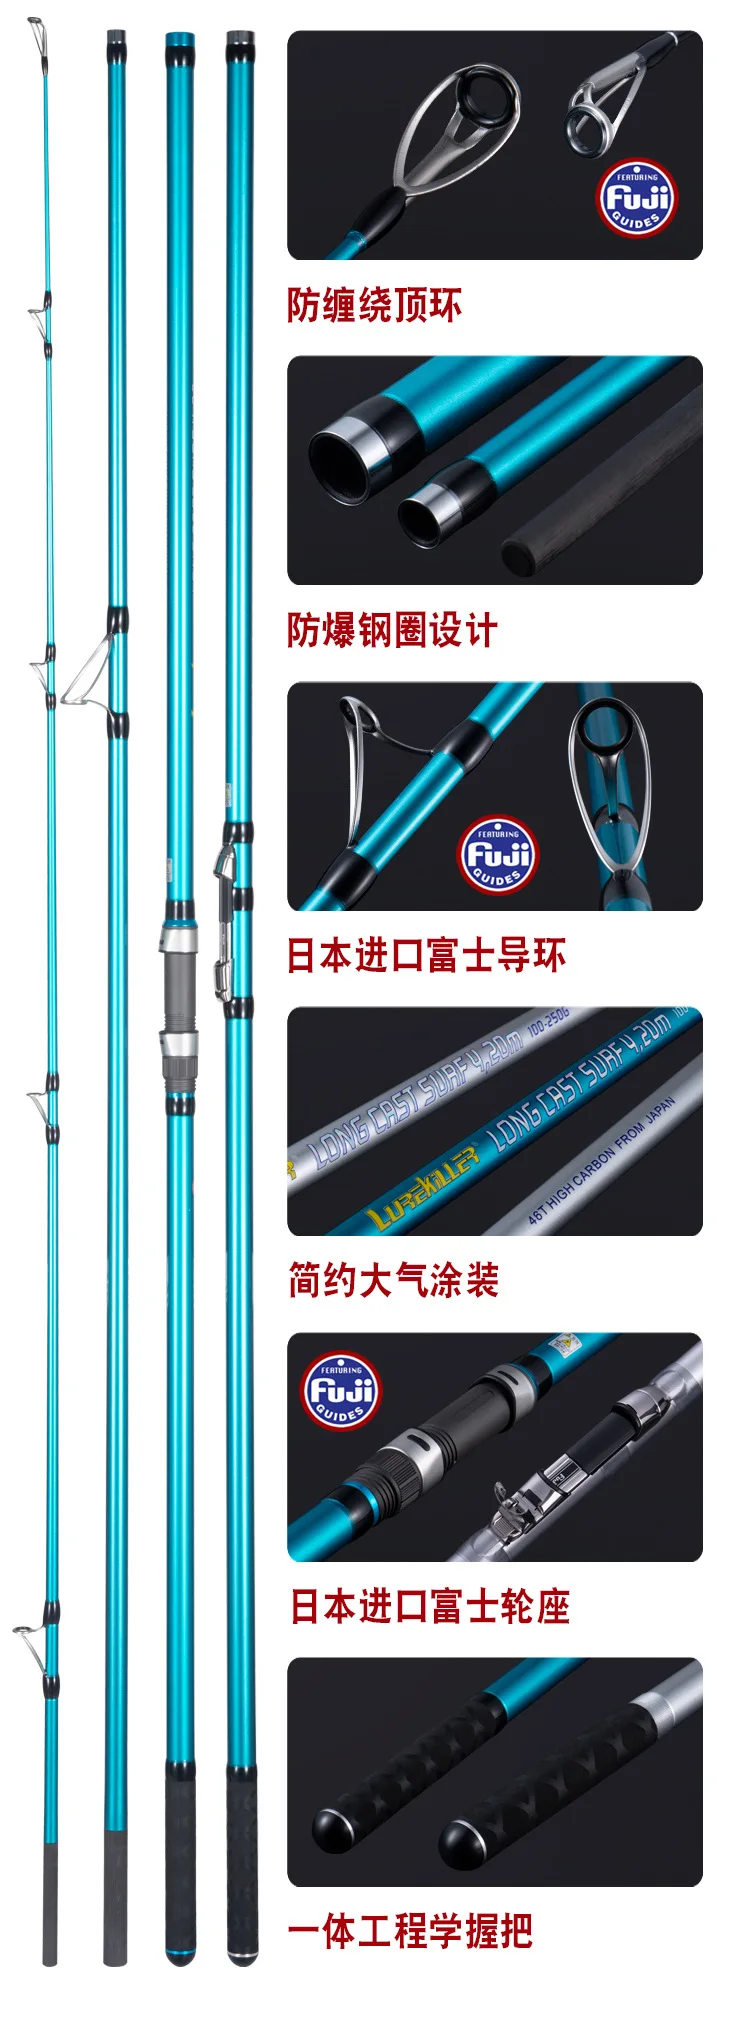 fuji lurekiller 4.2m long throw rod